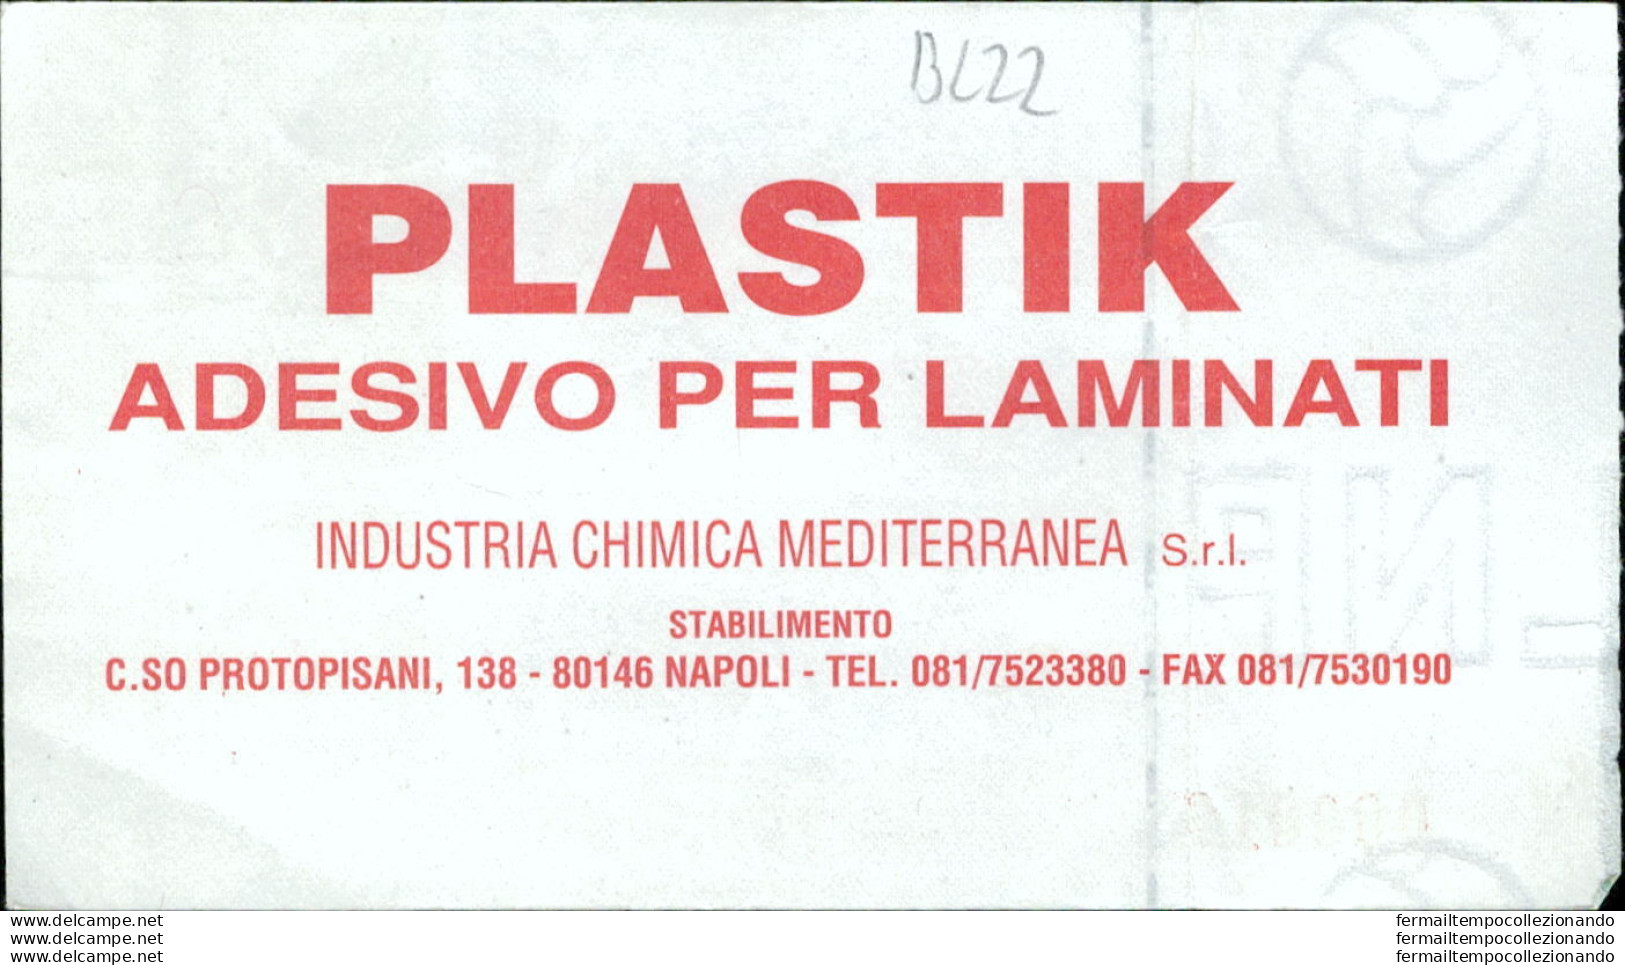 Bl22 Biglietto Calcio Ticket Juve Stabia  - Matera 1993-94 - Toegangskaarten